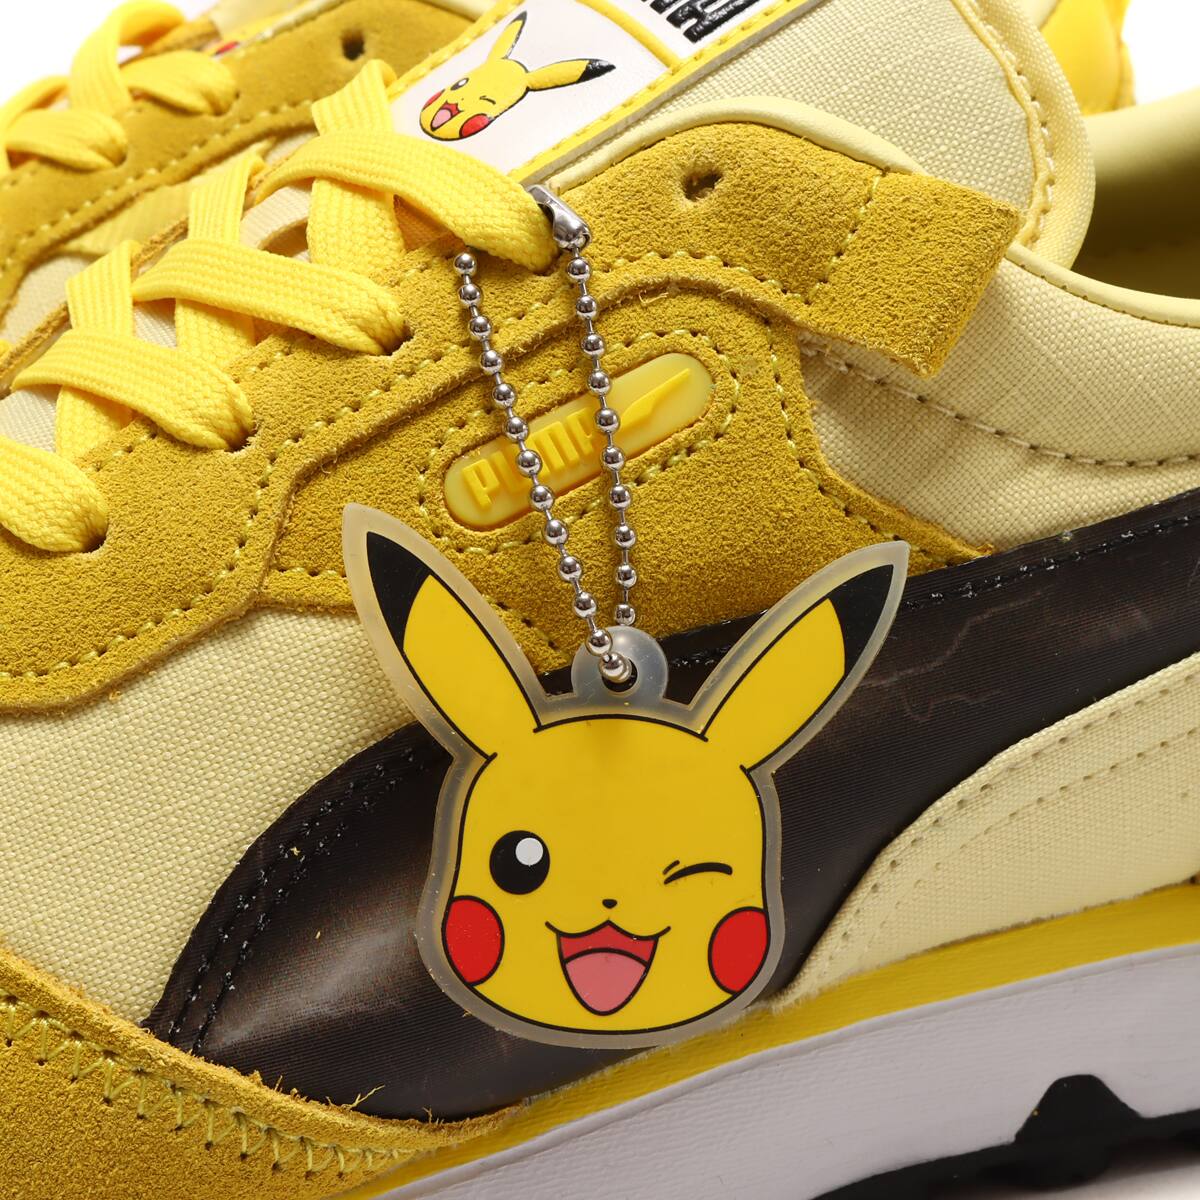 Pokémon X Rider FV 'Pikachu' - Puma - 387688 01 - empire yellow